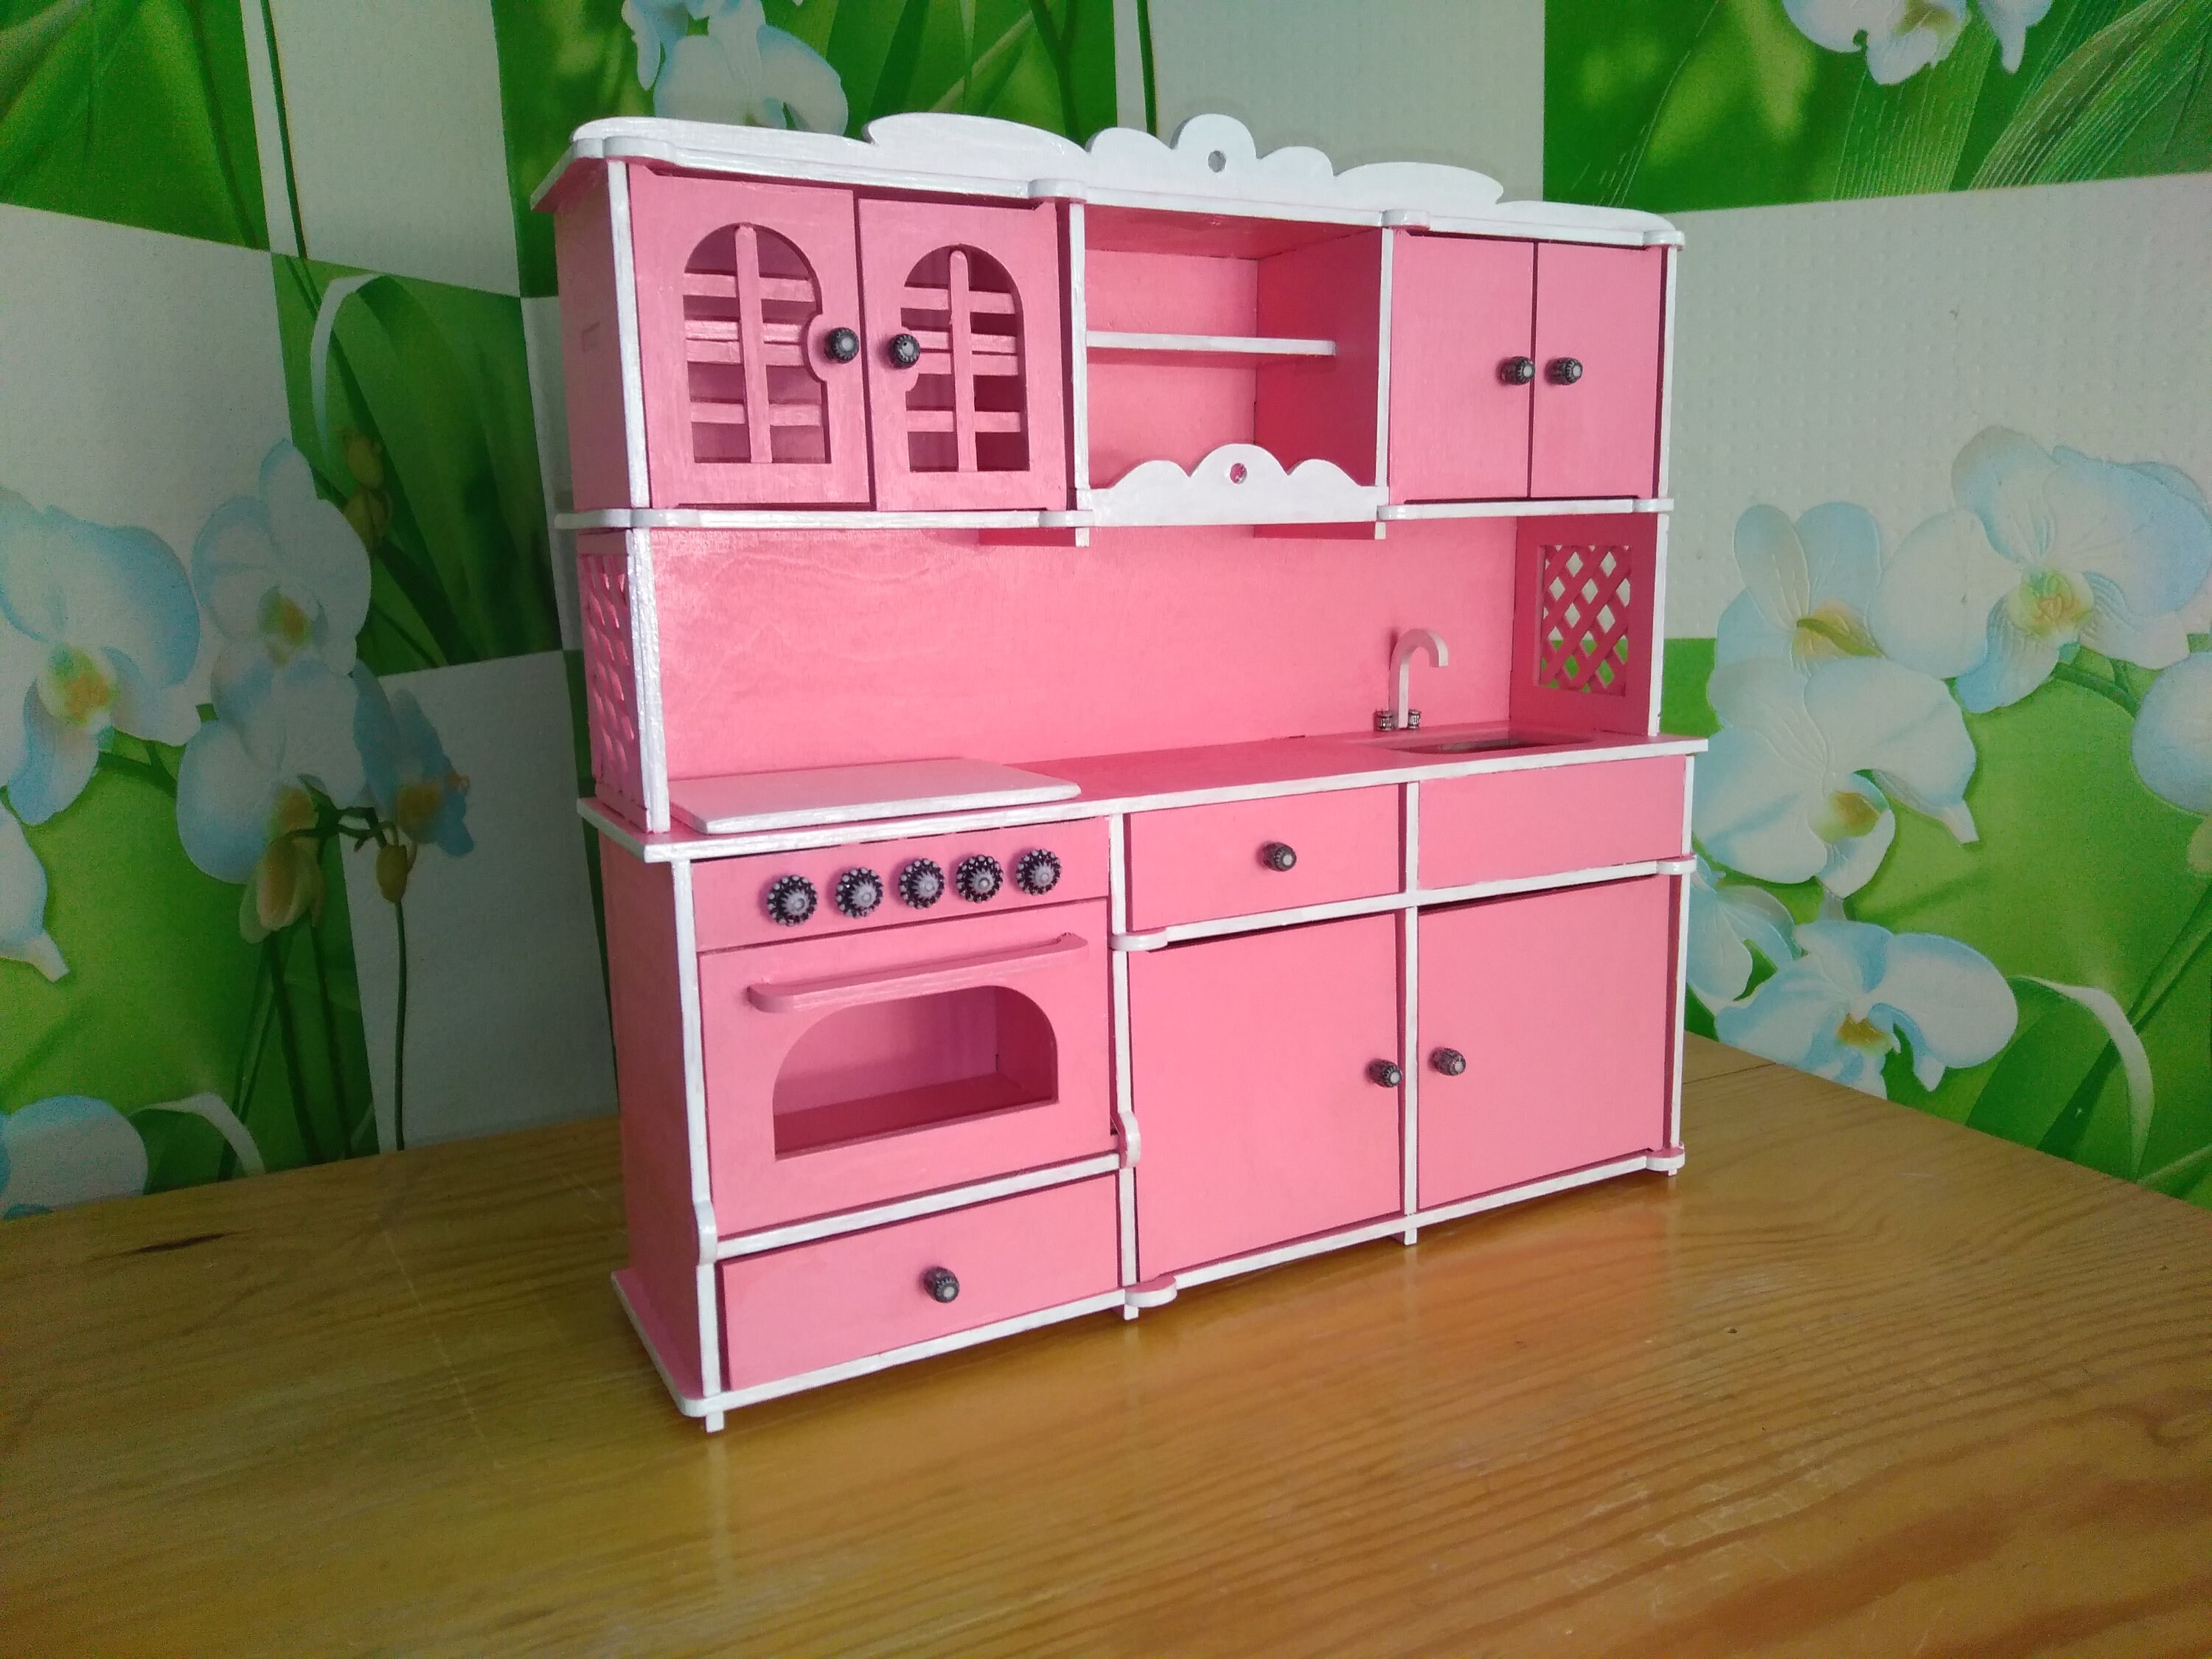  Kitchen  set  for Barbie  Kitchen  set  for 12 inch doll Barbie  